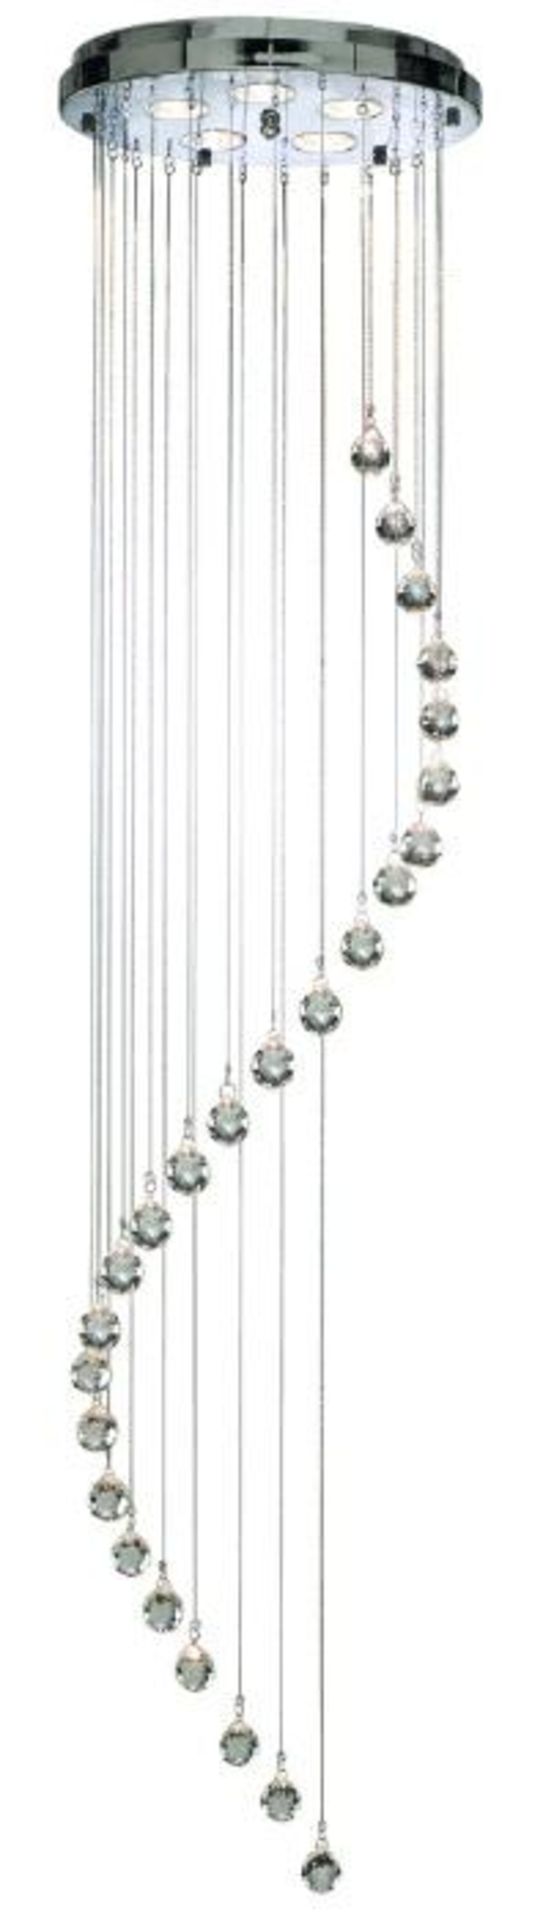 1 x Chrome 5-Light Multi-drop Pendant Fitting With Crystal Balls - 180cm Drop (Adjustable) - New Bo